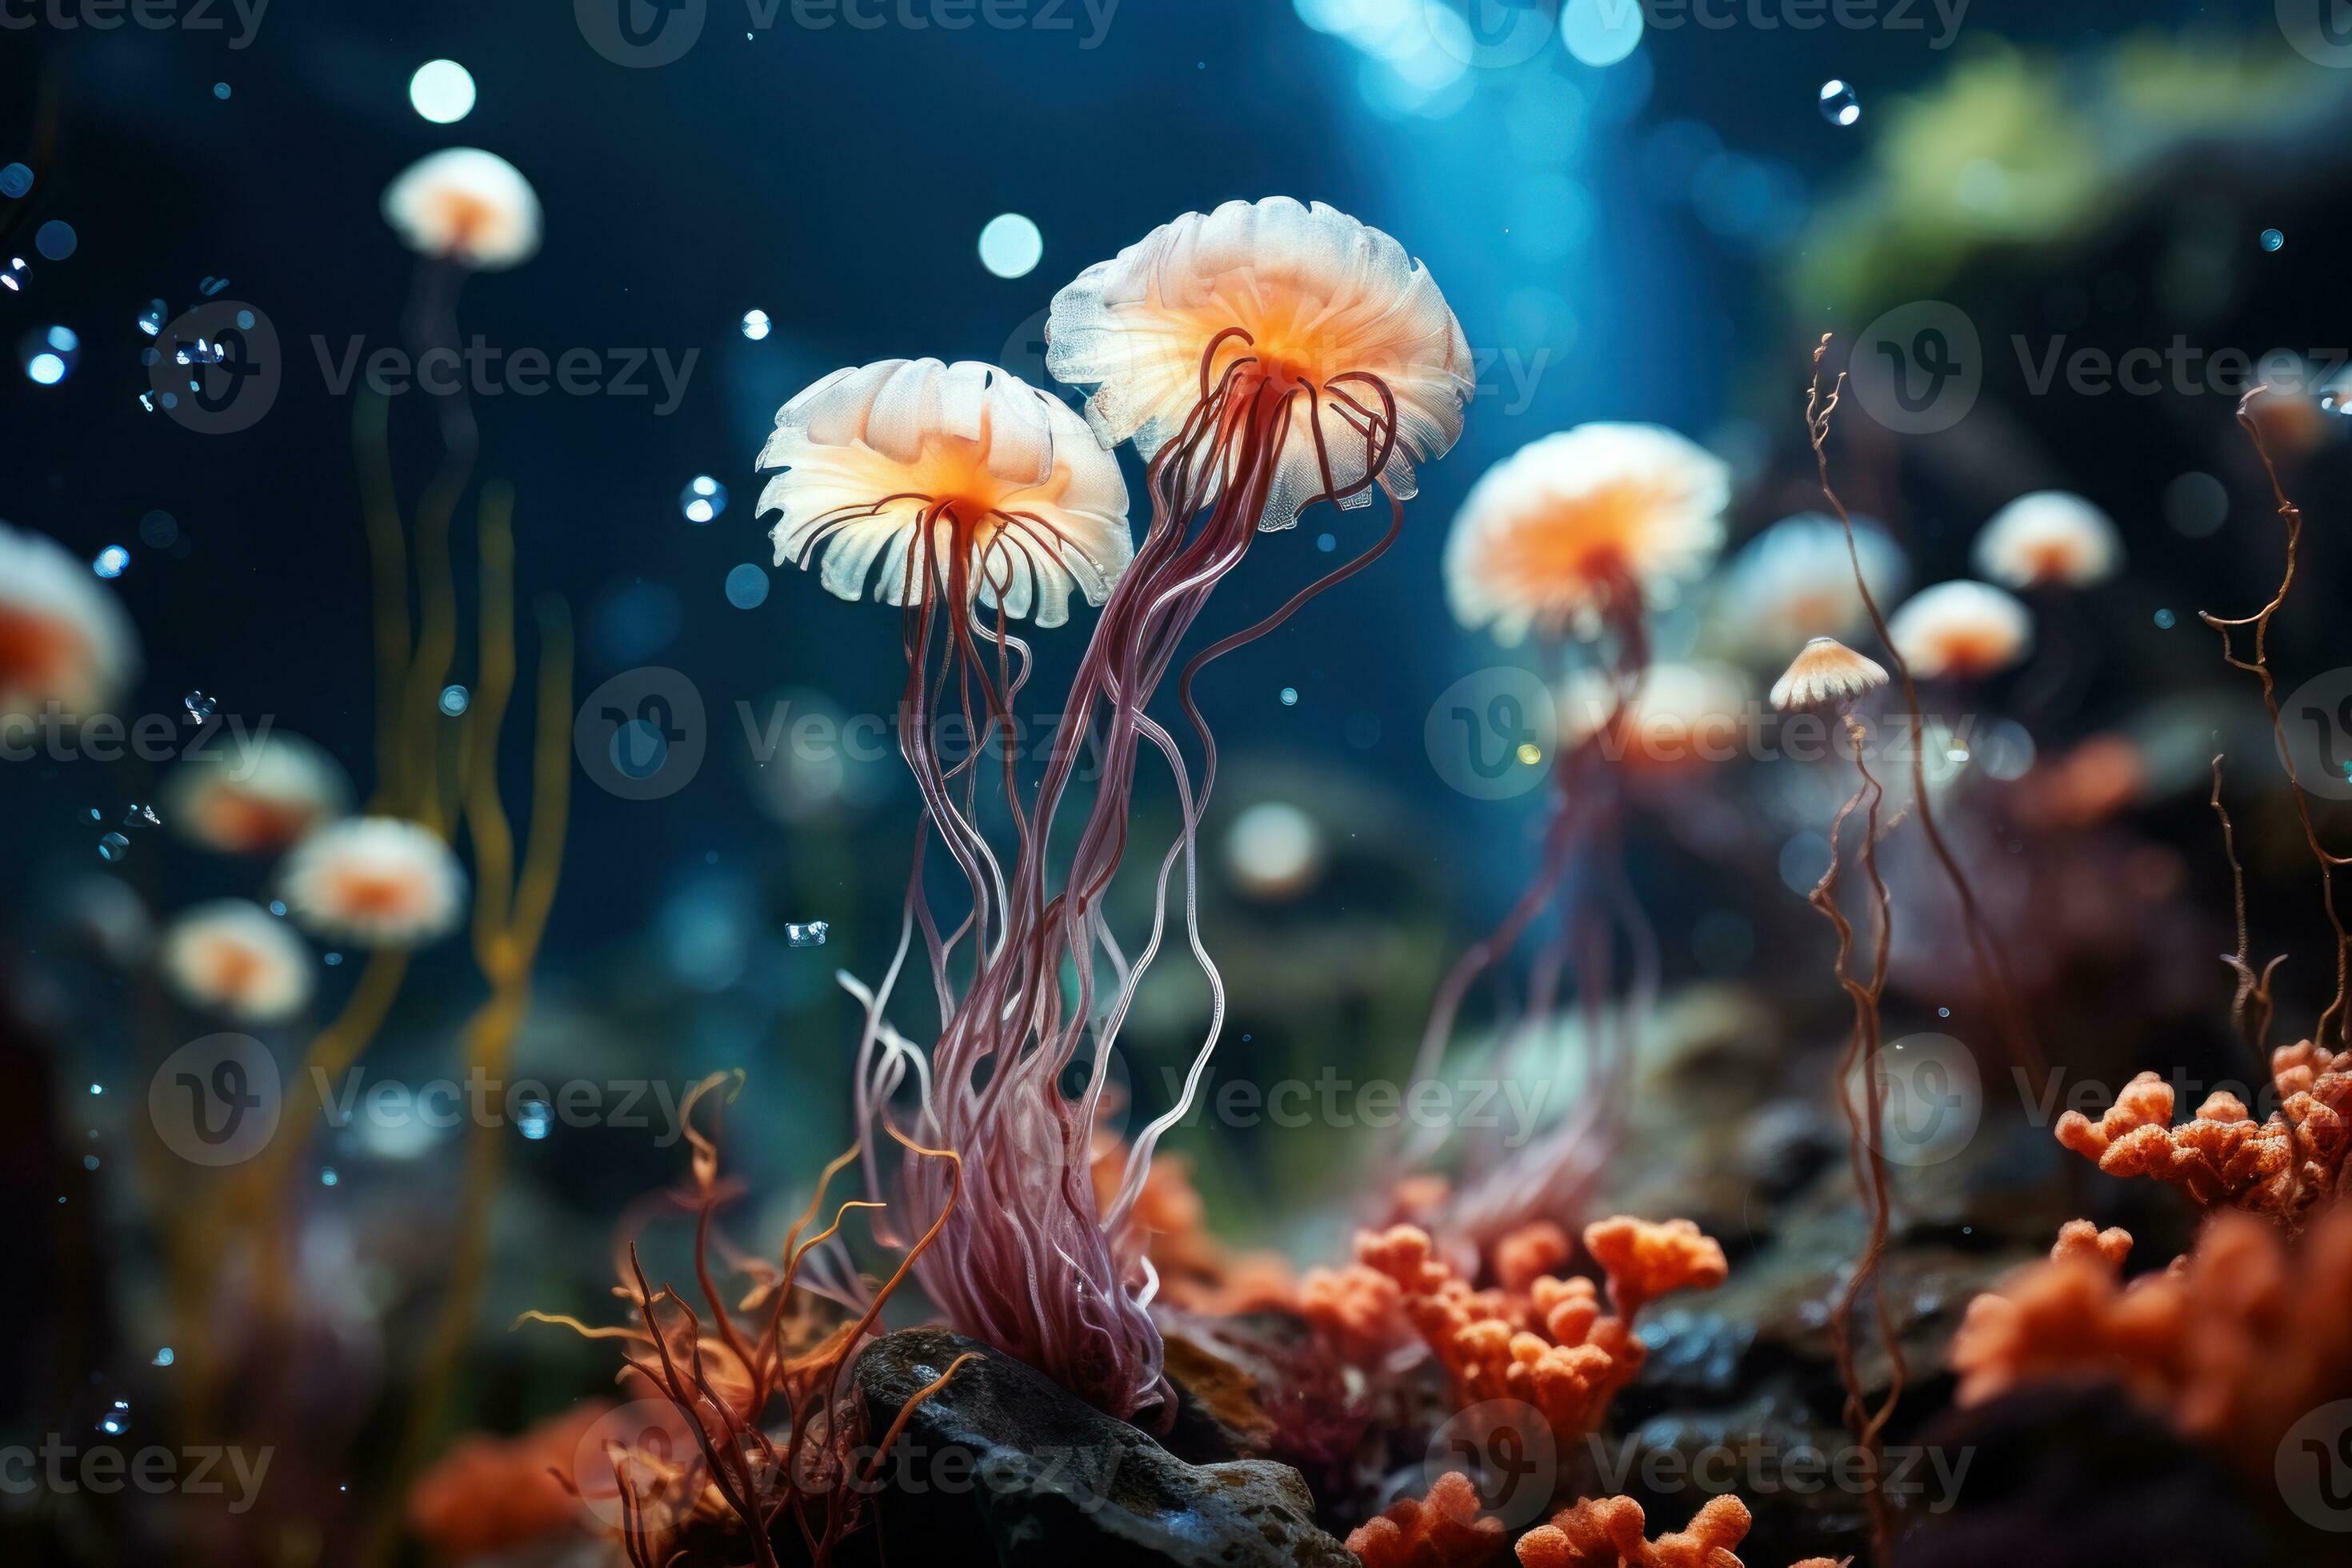 Underwater scene with corals and jellyfish in aquarium. Wonderful